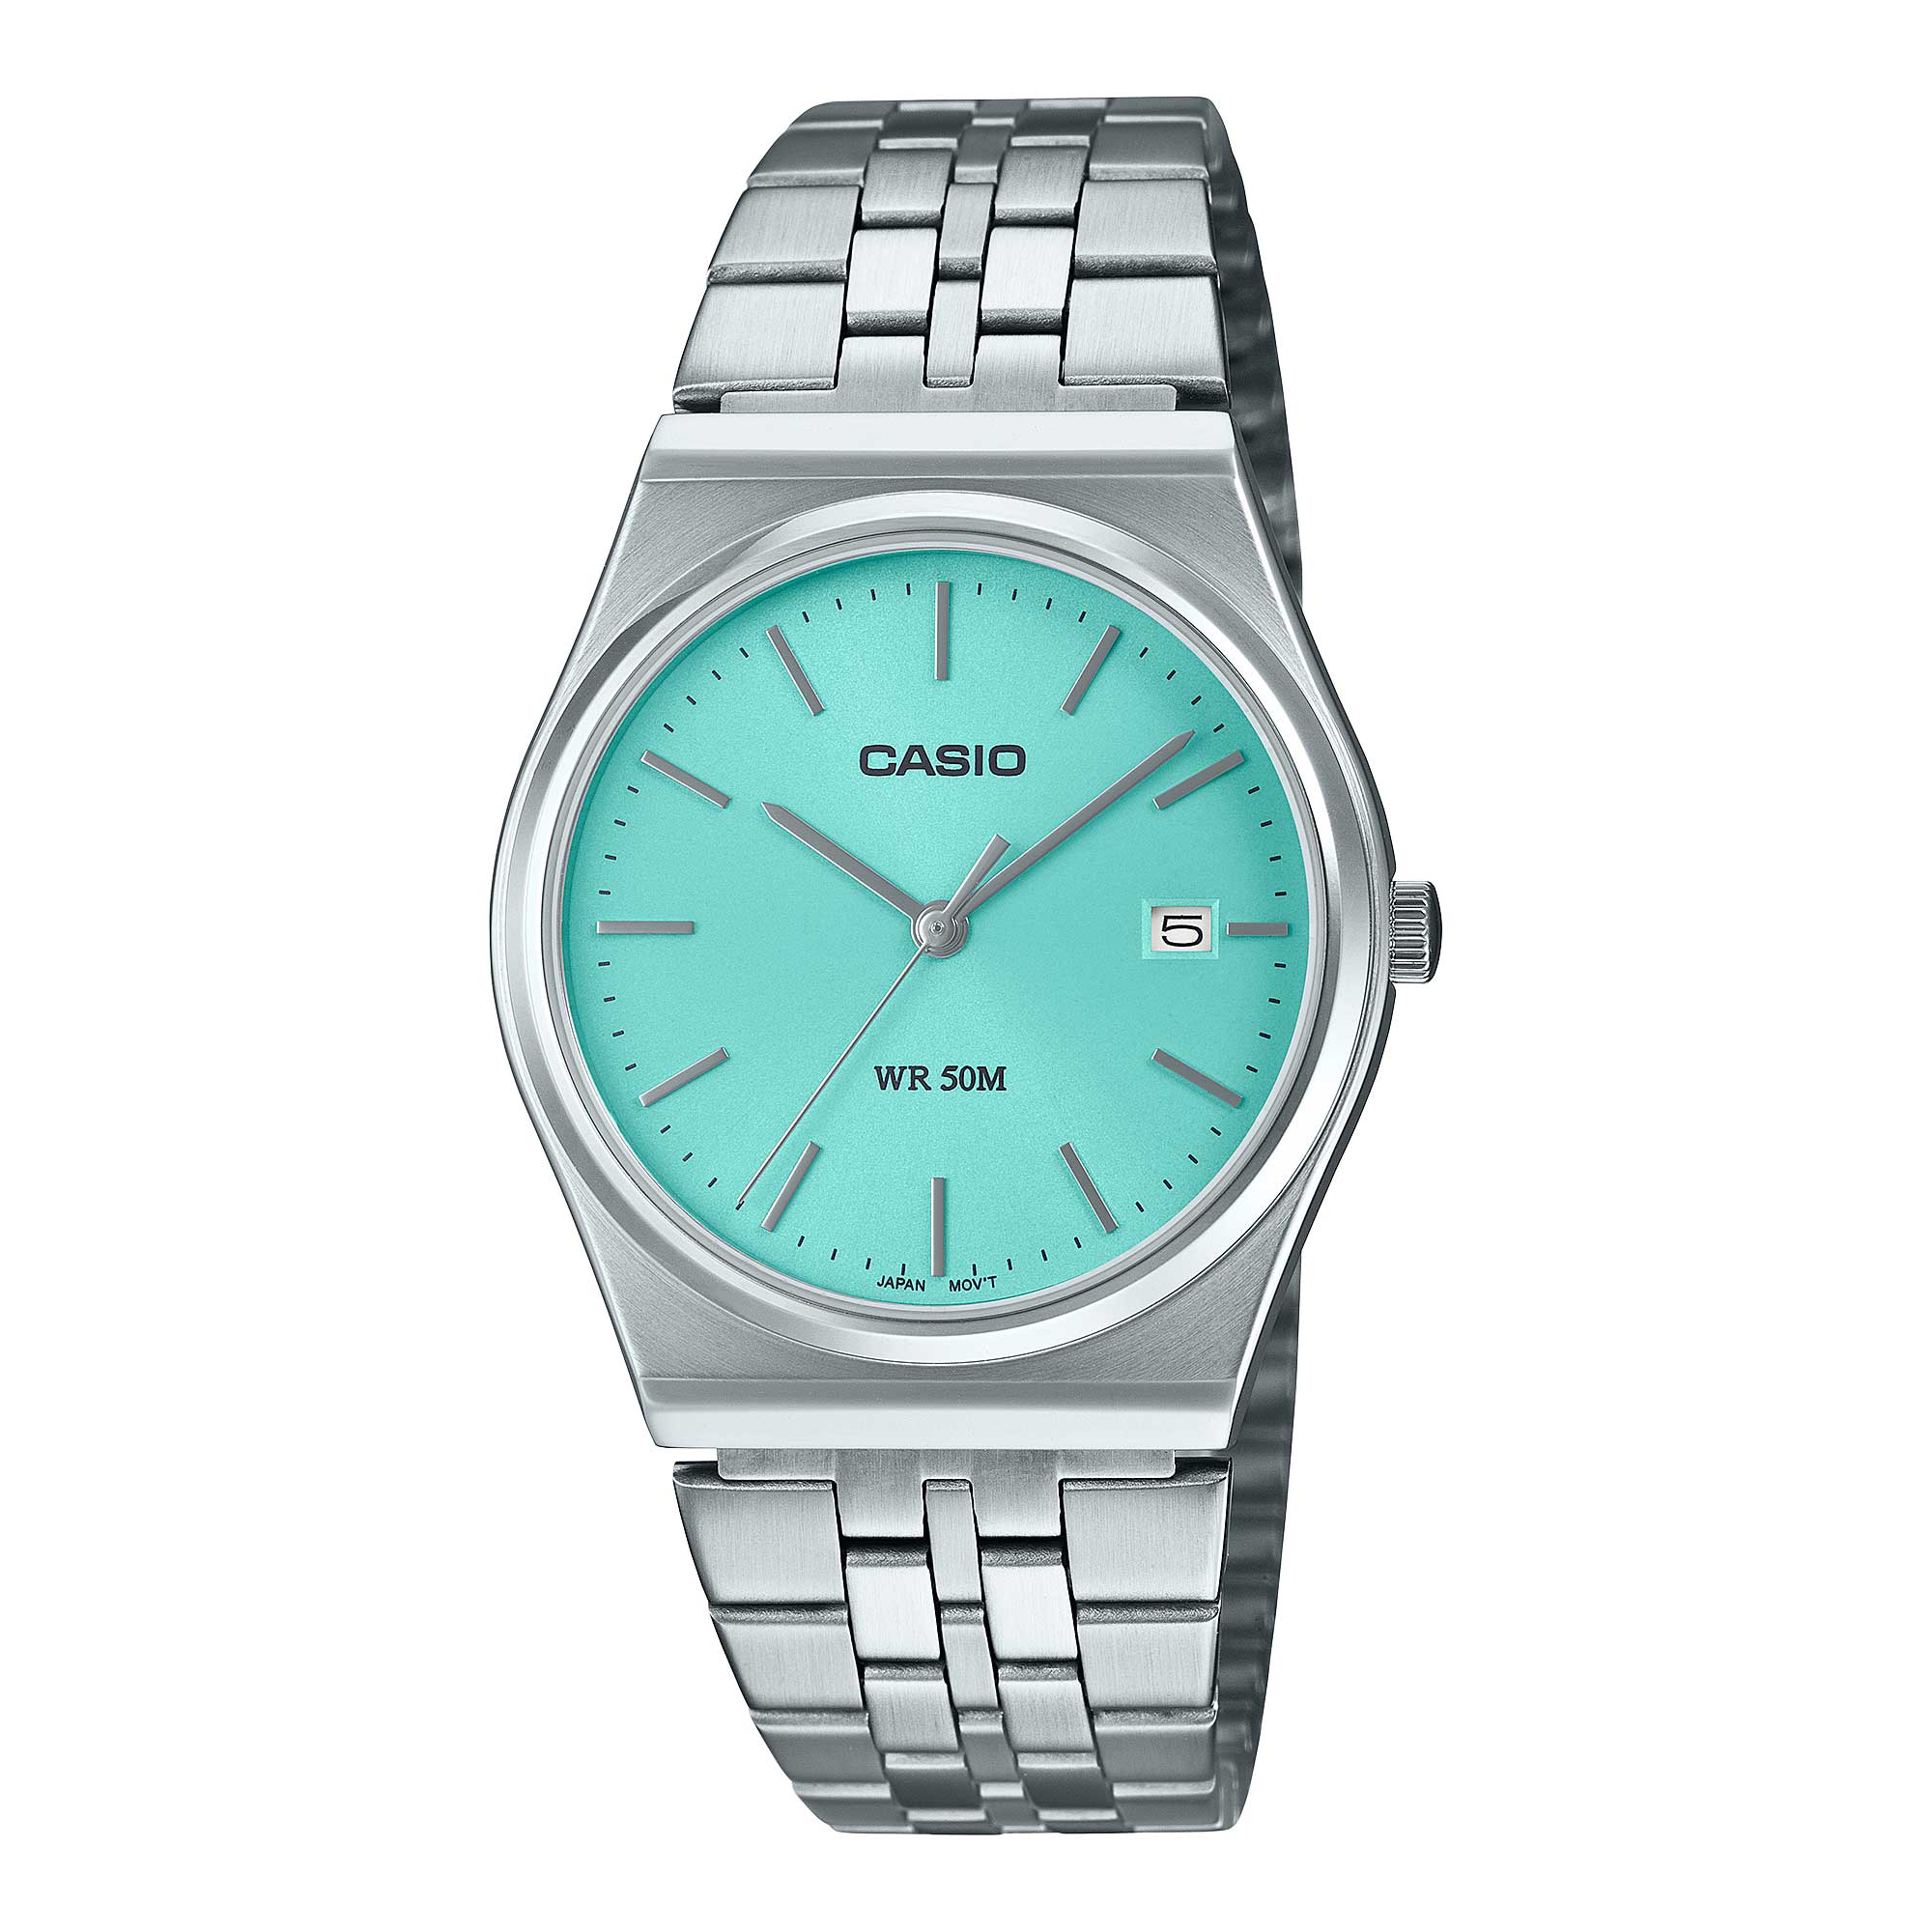 Casio Men's Analog Retro Look Minimalist Dial Watch MTPB145D-2A1 MTP-B145D-2A1